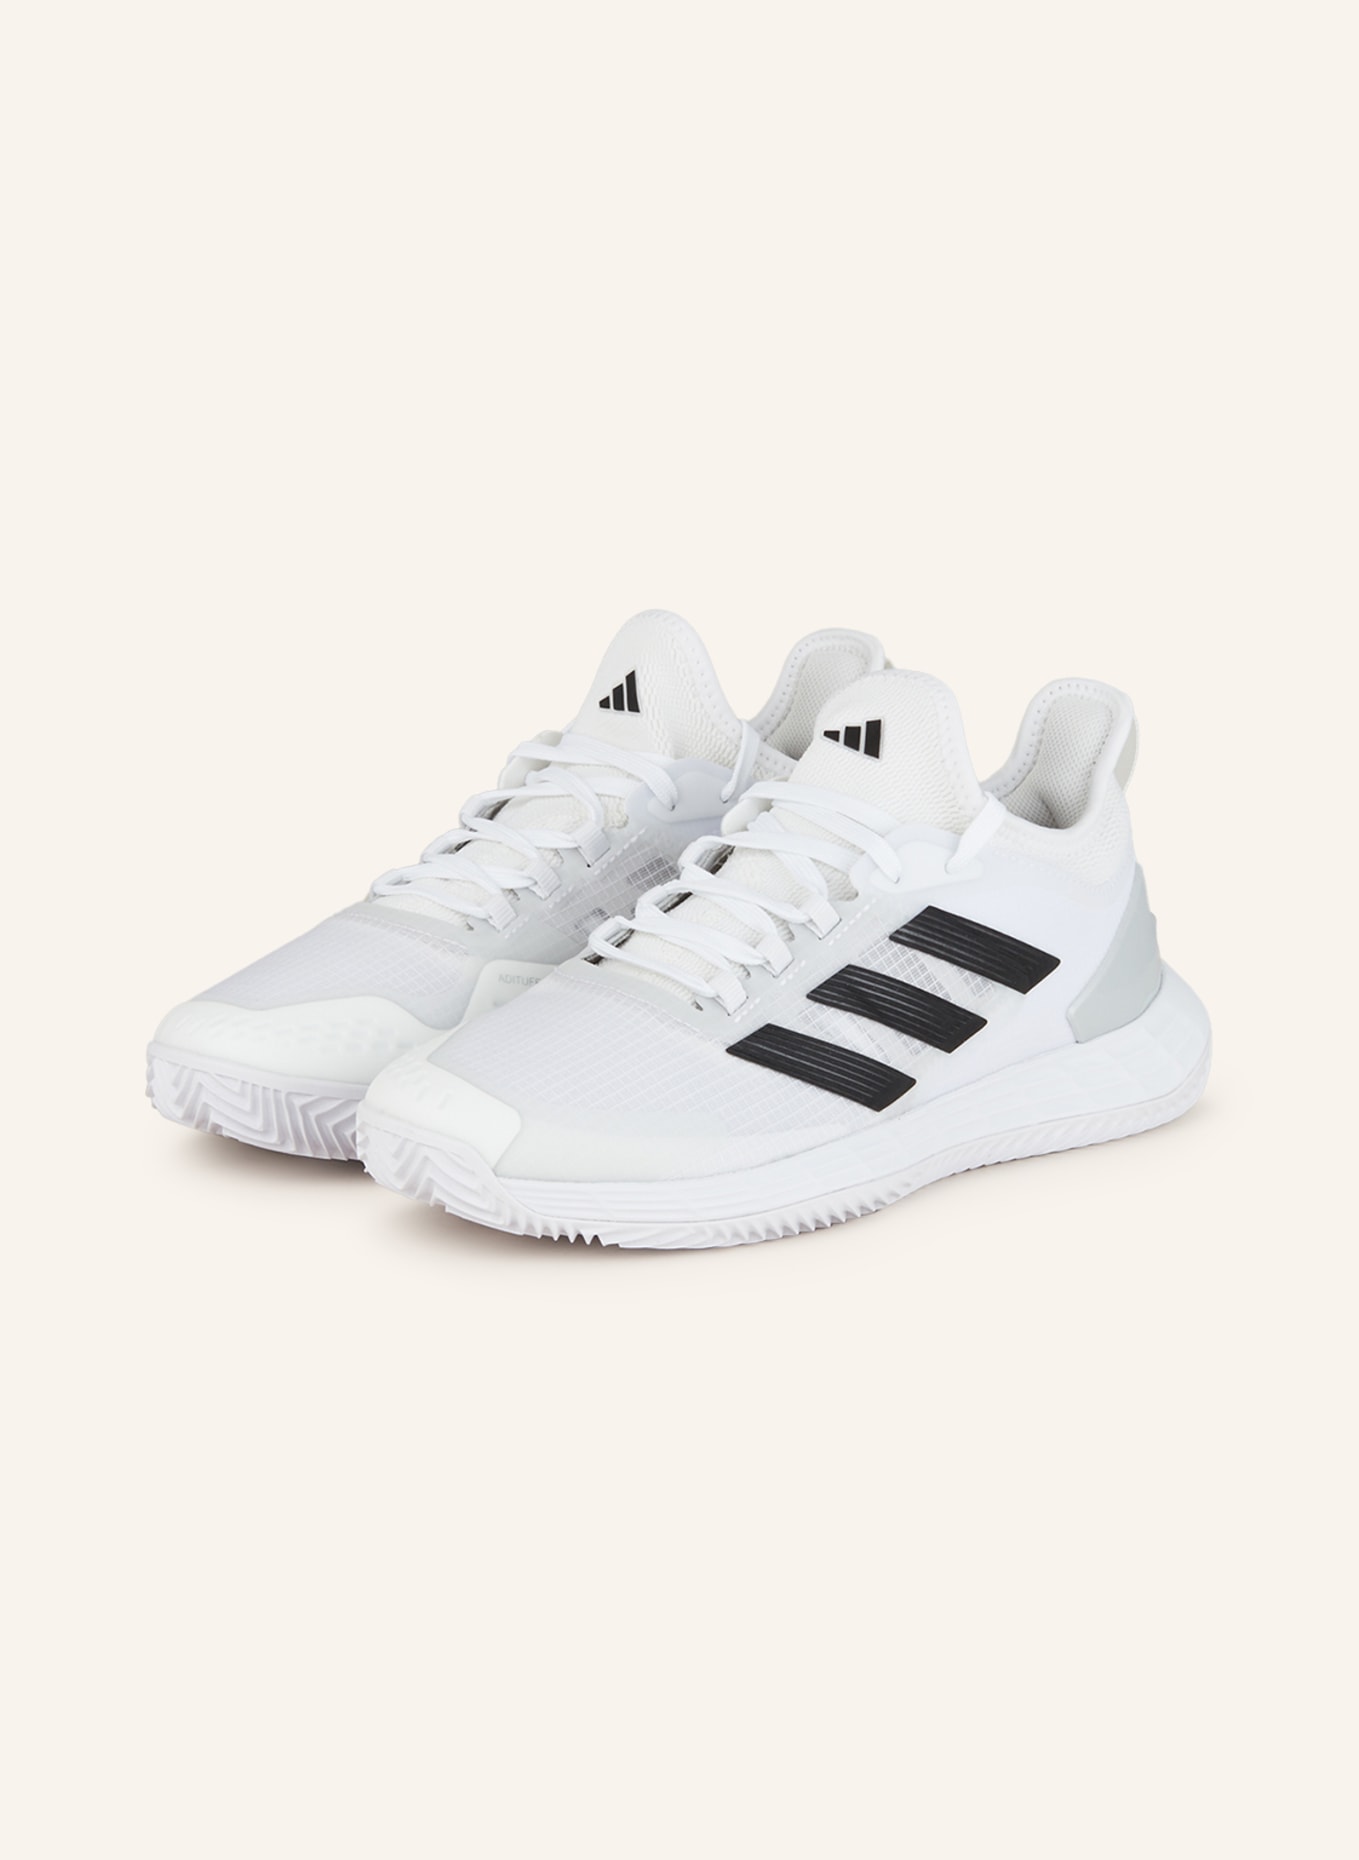 adidas Adizero Ubersonic 4.1 Tennis Shoes - White, Men's Tennis